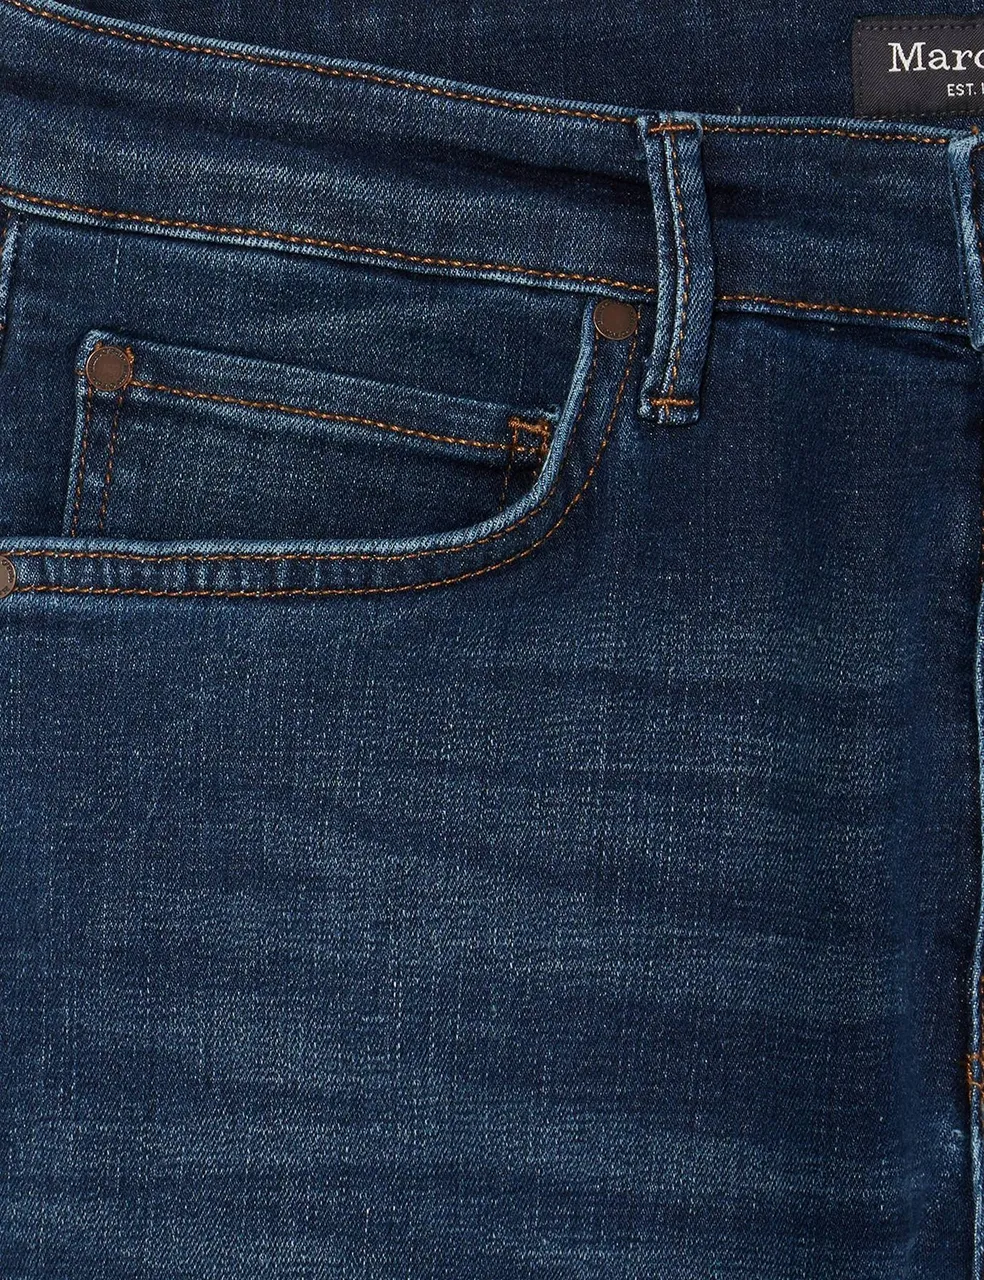 Slim Fit Jeans Denim trousers, shaped fit, shaped